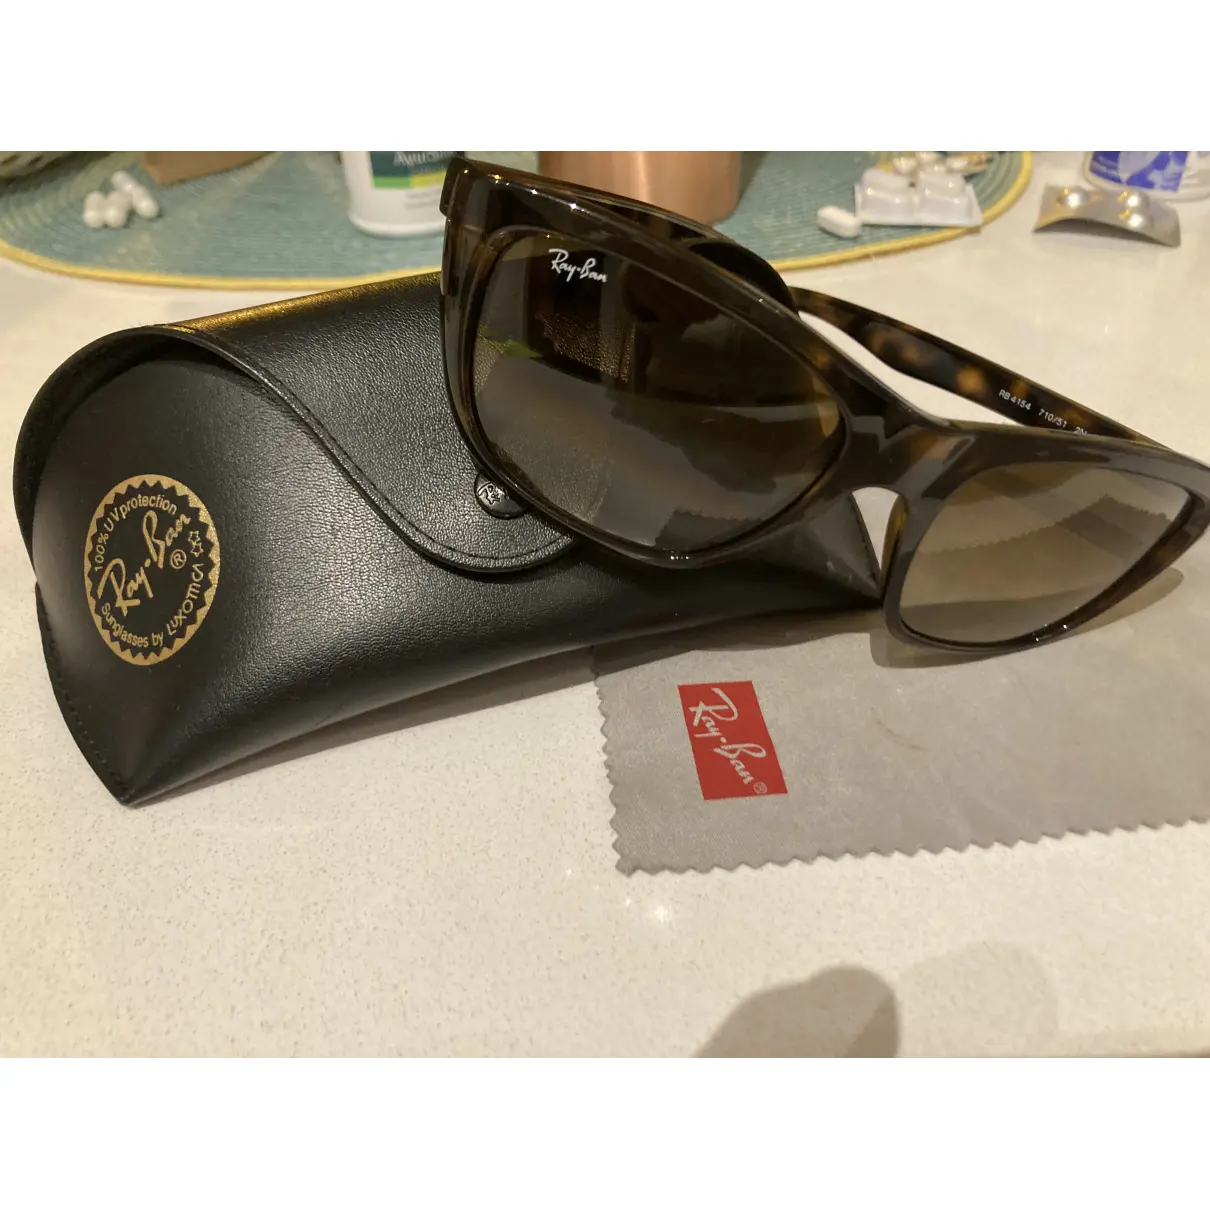 Buy Ray-Ban New Wayfarer sunglasses online